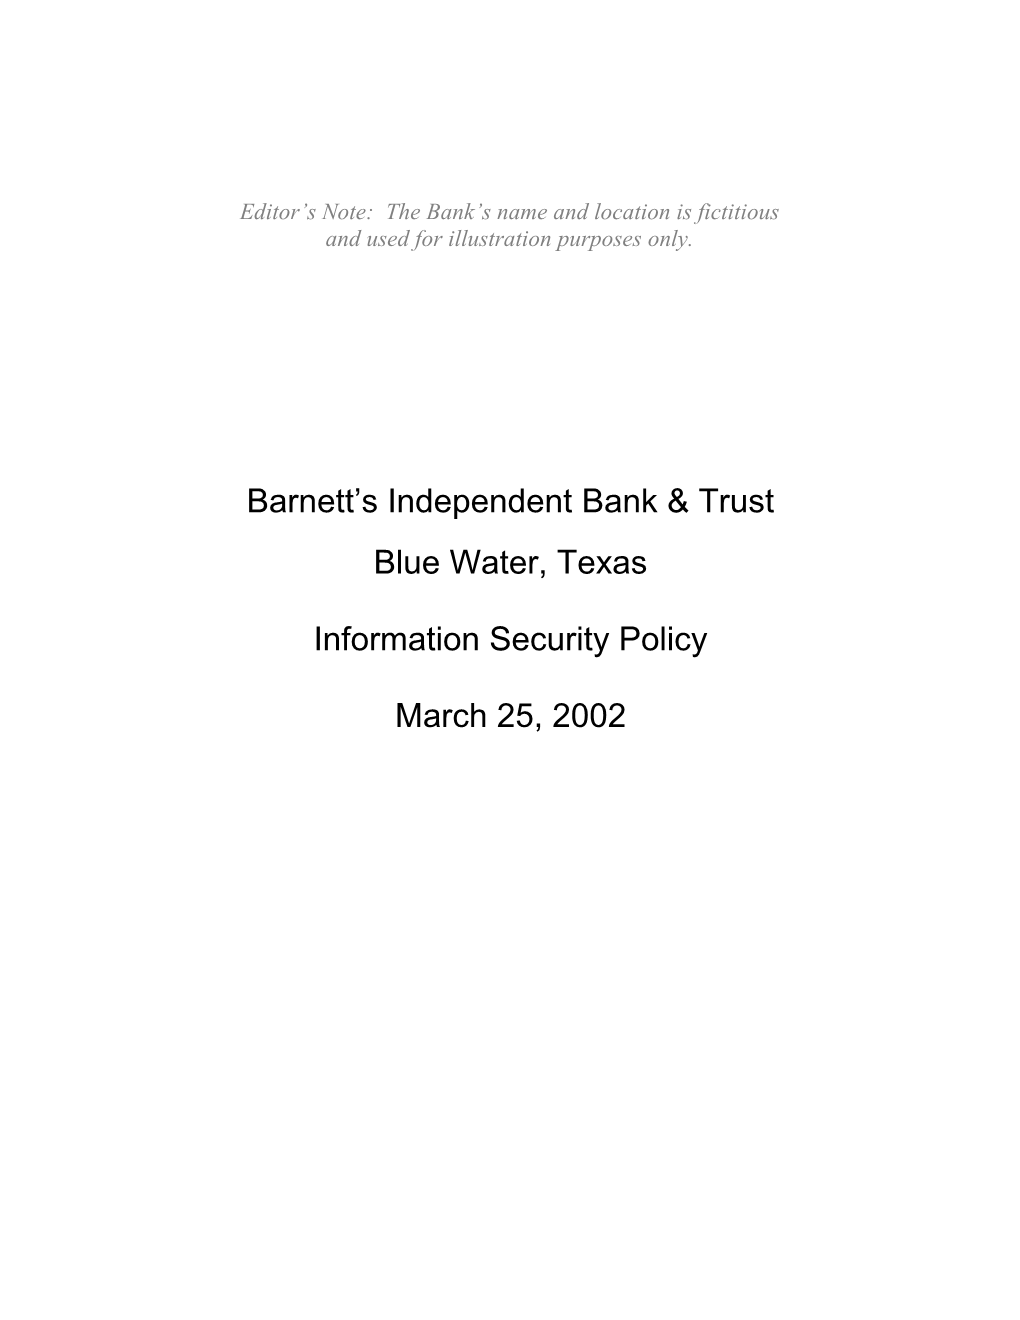 Barnett S Independent Bank & Trust